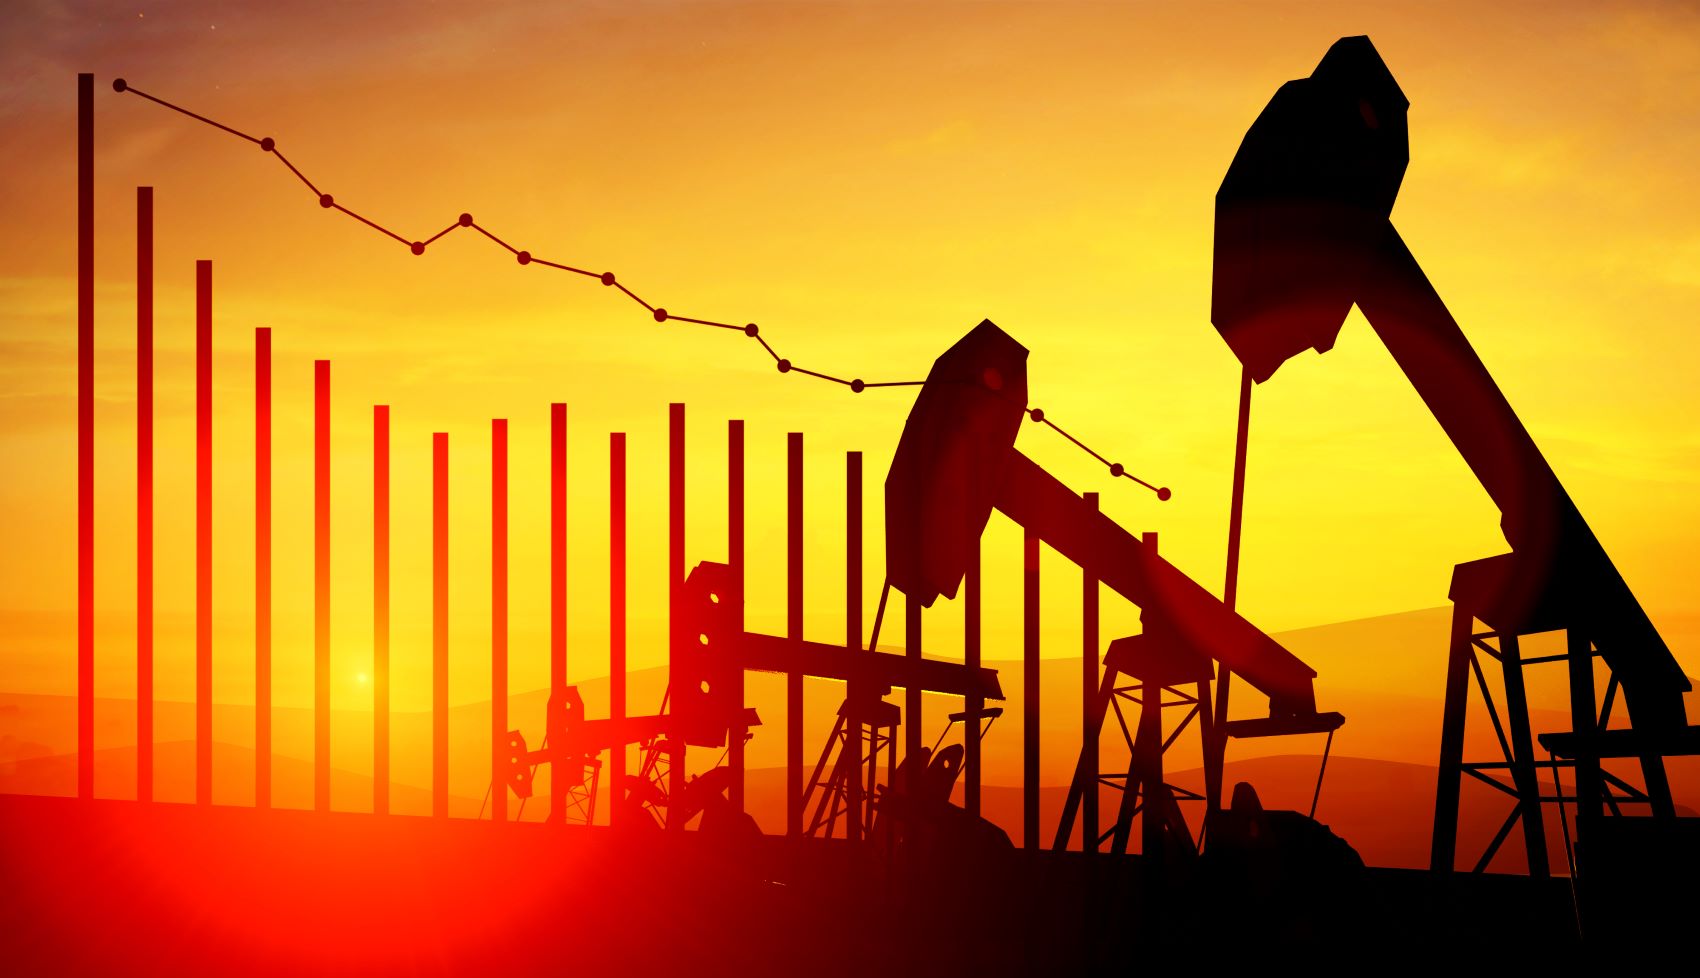 Oil pump platform index prices drop low